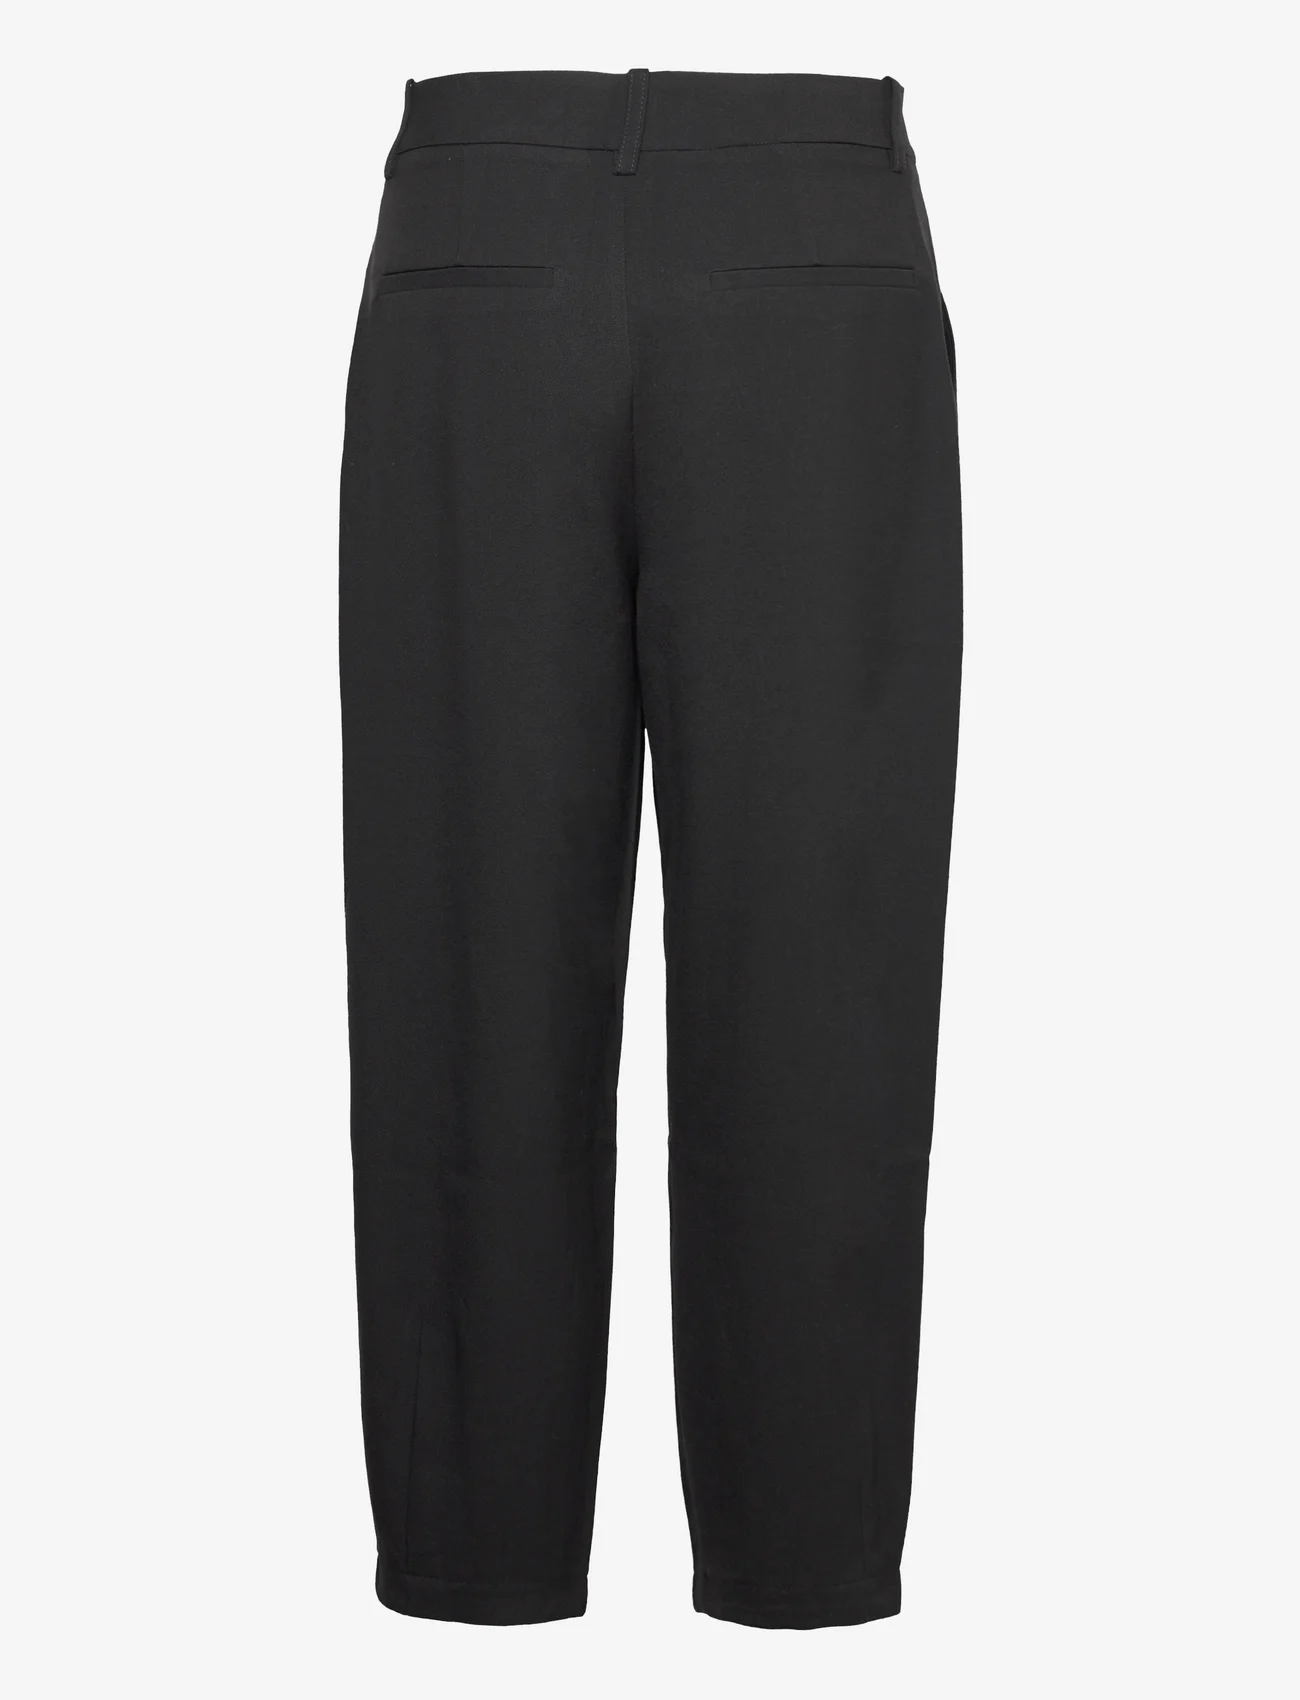 Kaffe - KAmerle Pants Suiting - tailored trousers - black deep - 1